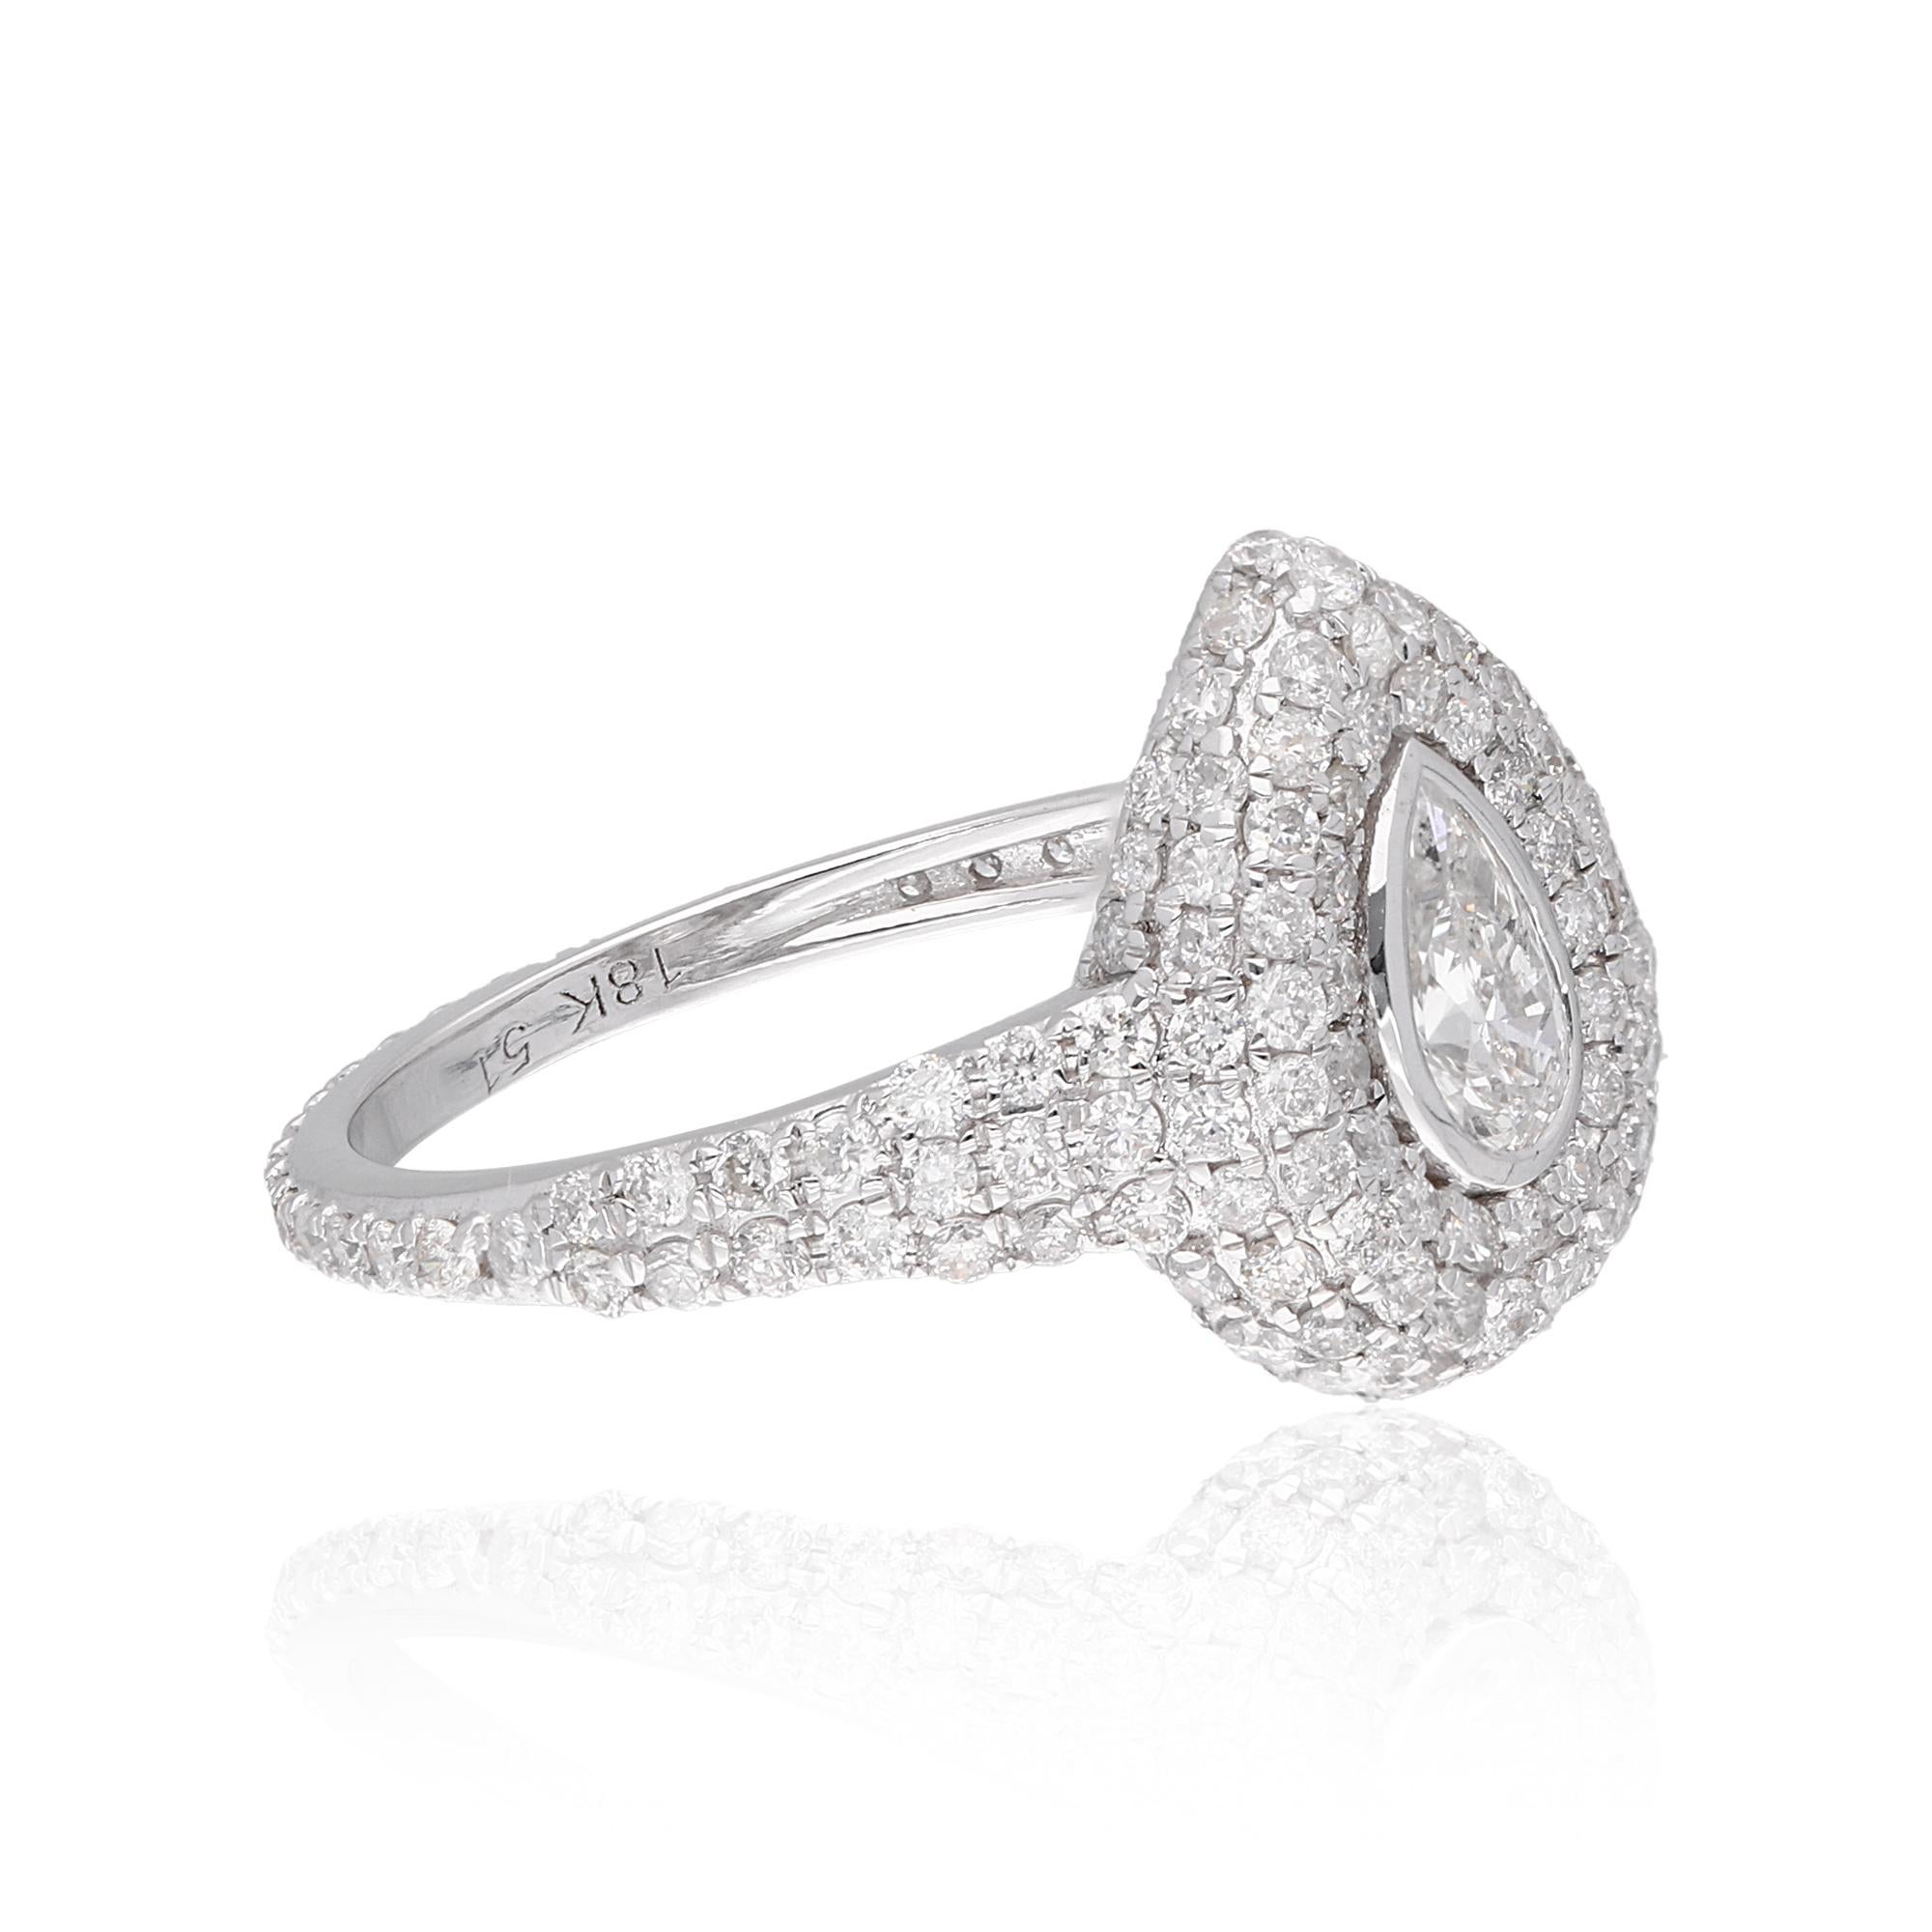 Women's 1.54 Carat Pear Diamond Studded Ring 18 Karat White Gold Handmade Fine Jewelry For Sale